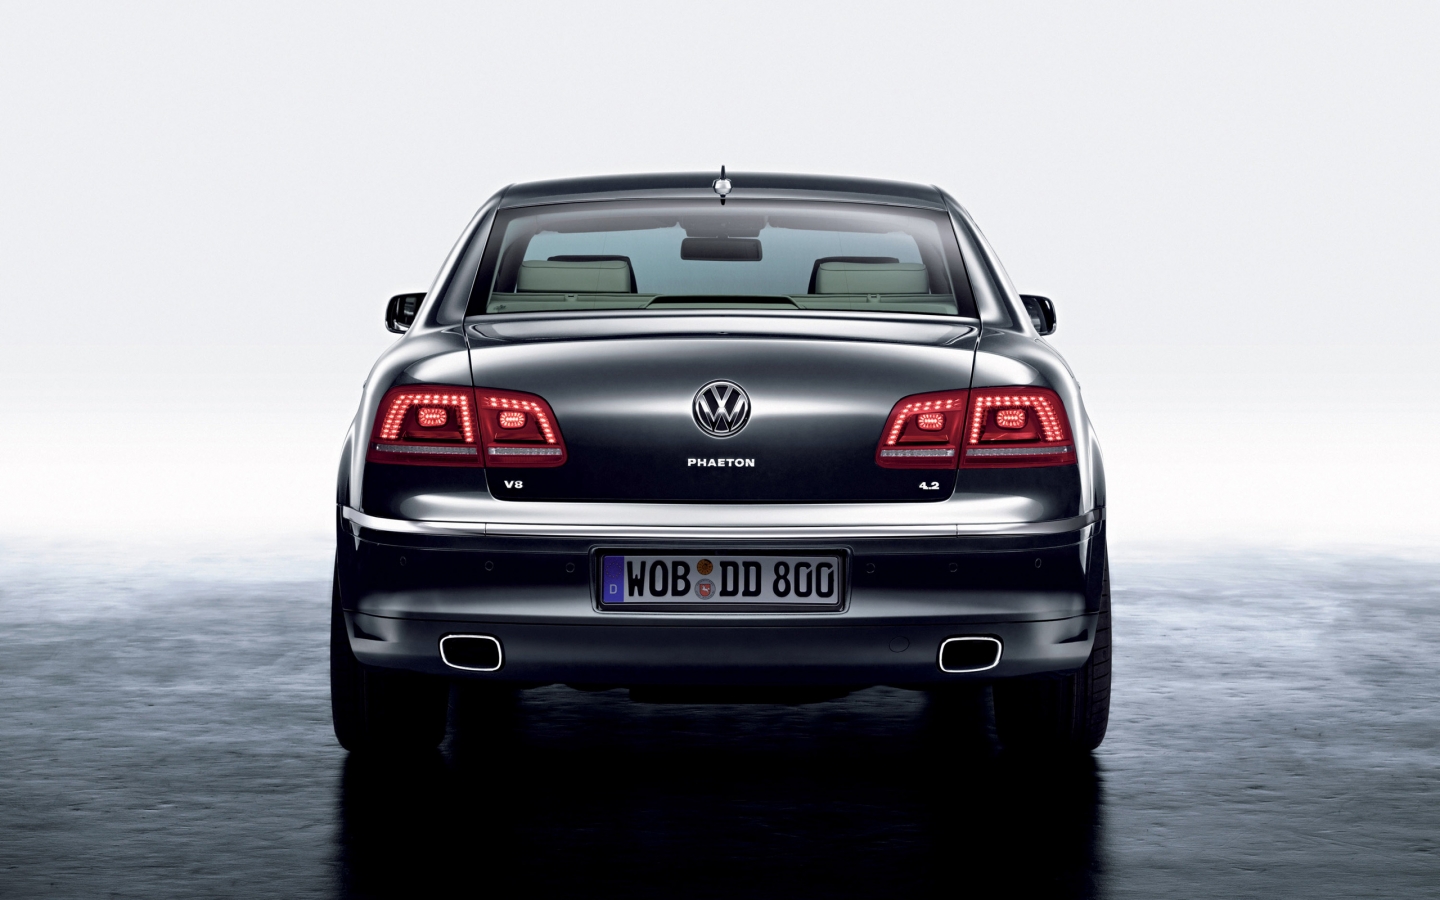 Volkswagen Phaeton Rear for 1440 x 900 widescreen resolution